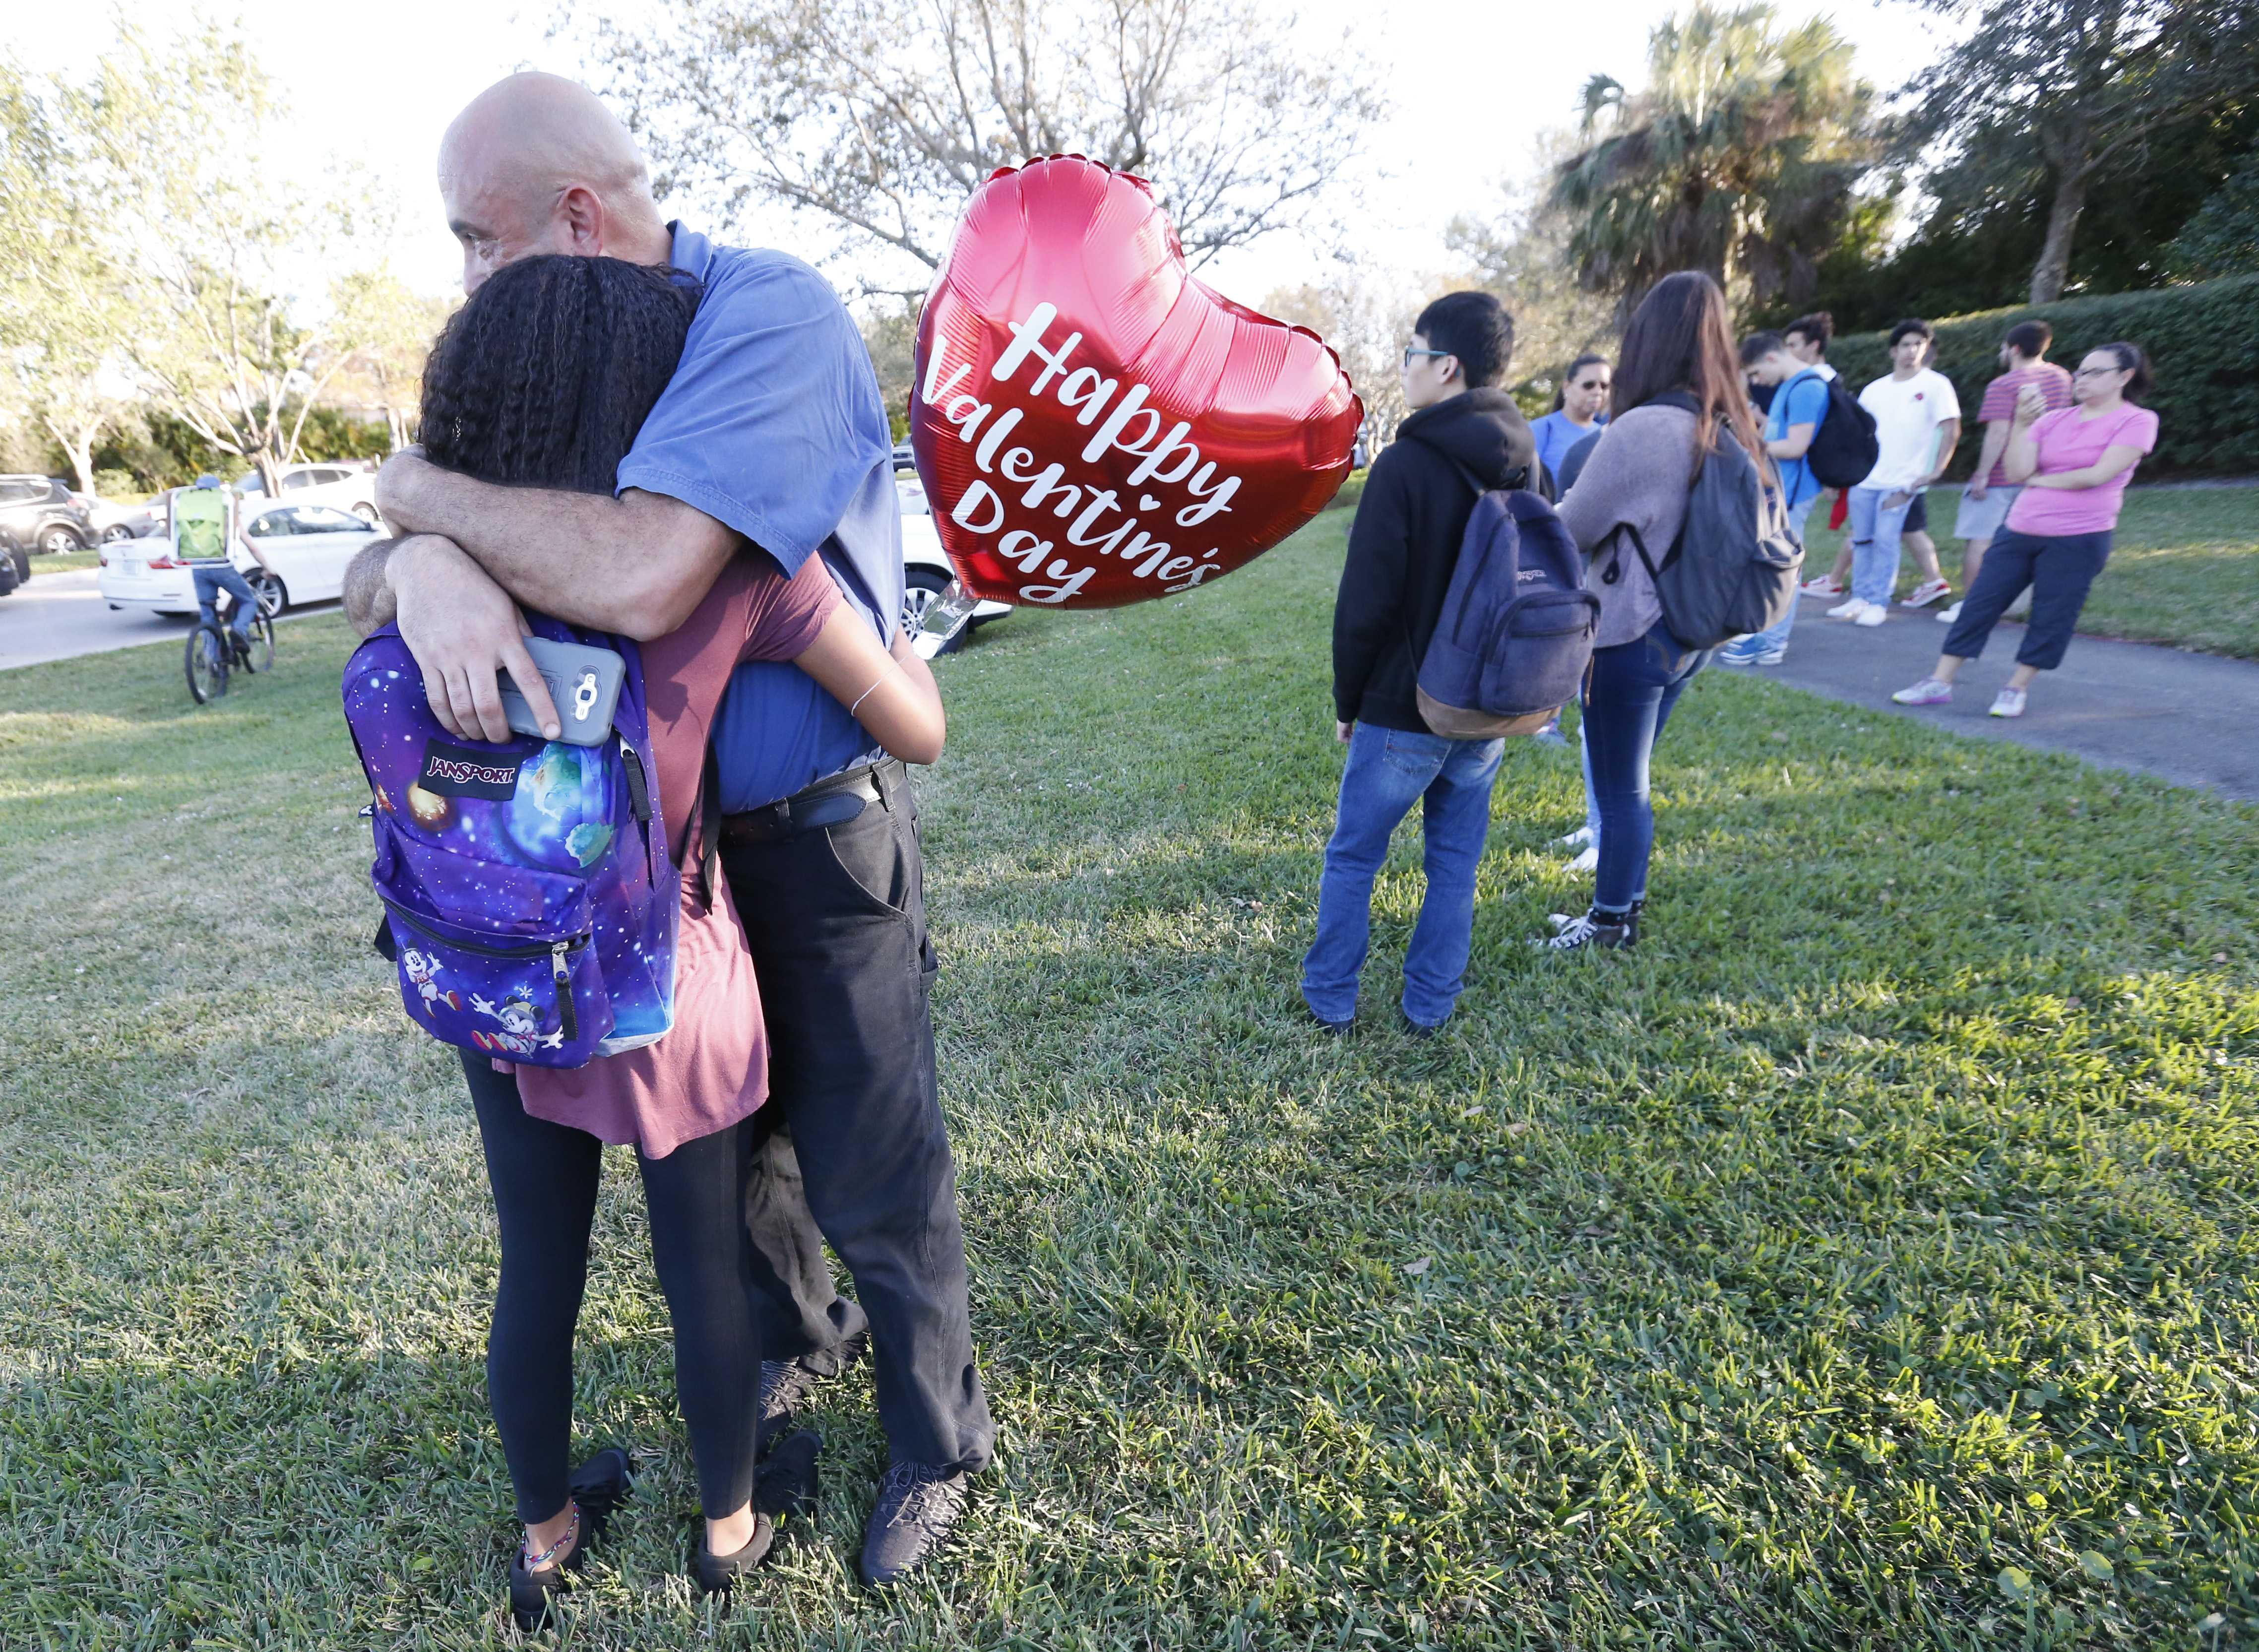 In emotional video, Stoneman Douglas principal promises to hug every student